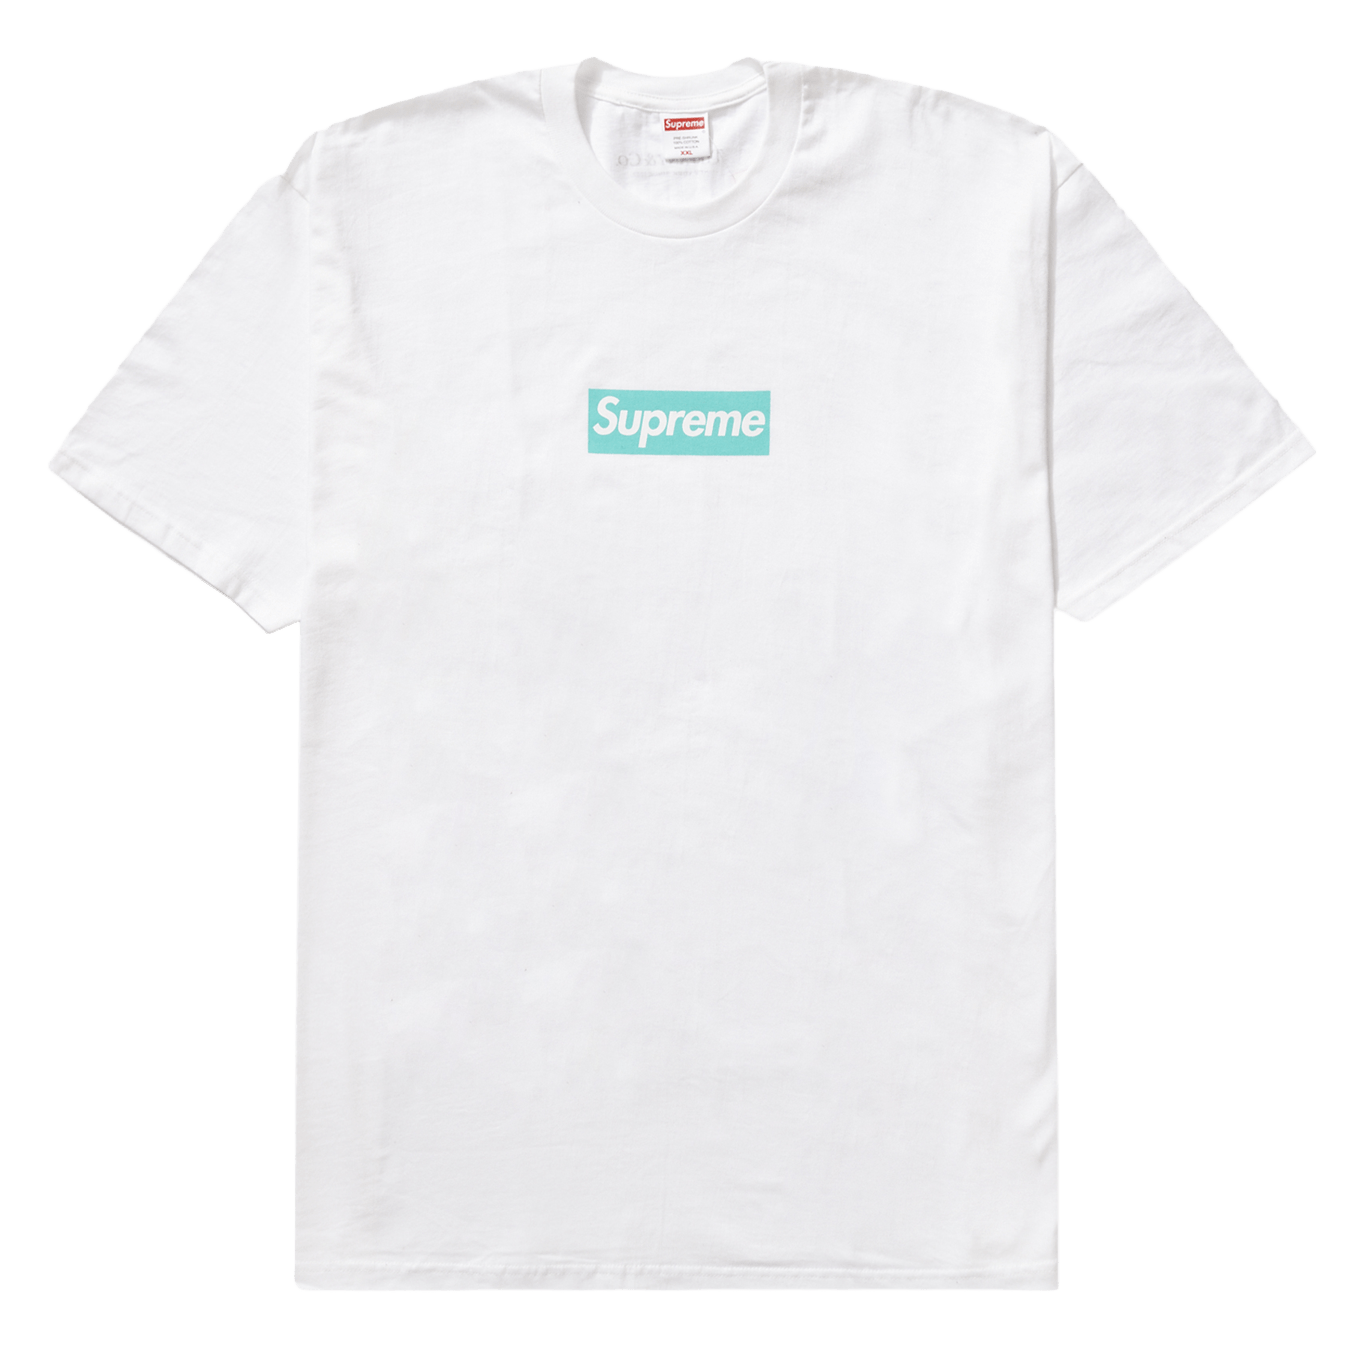 box logo supreme shirt